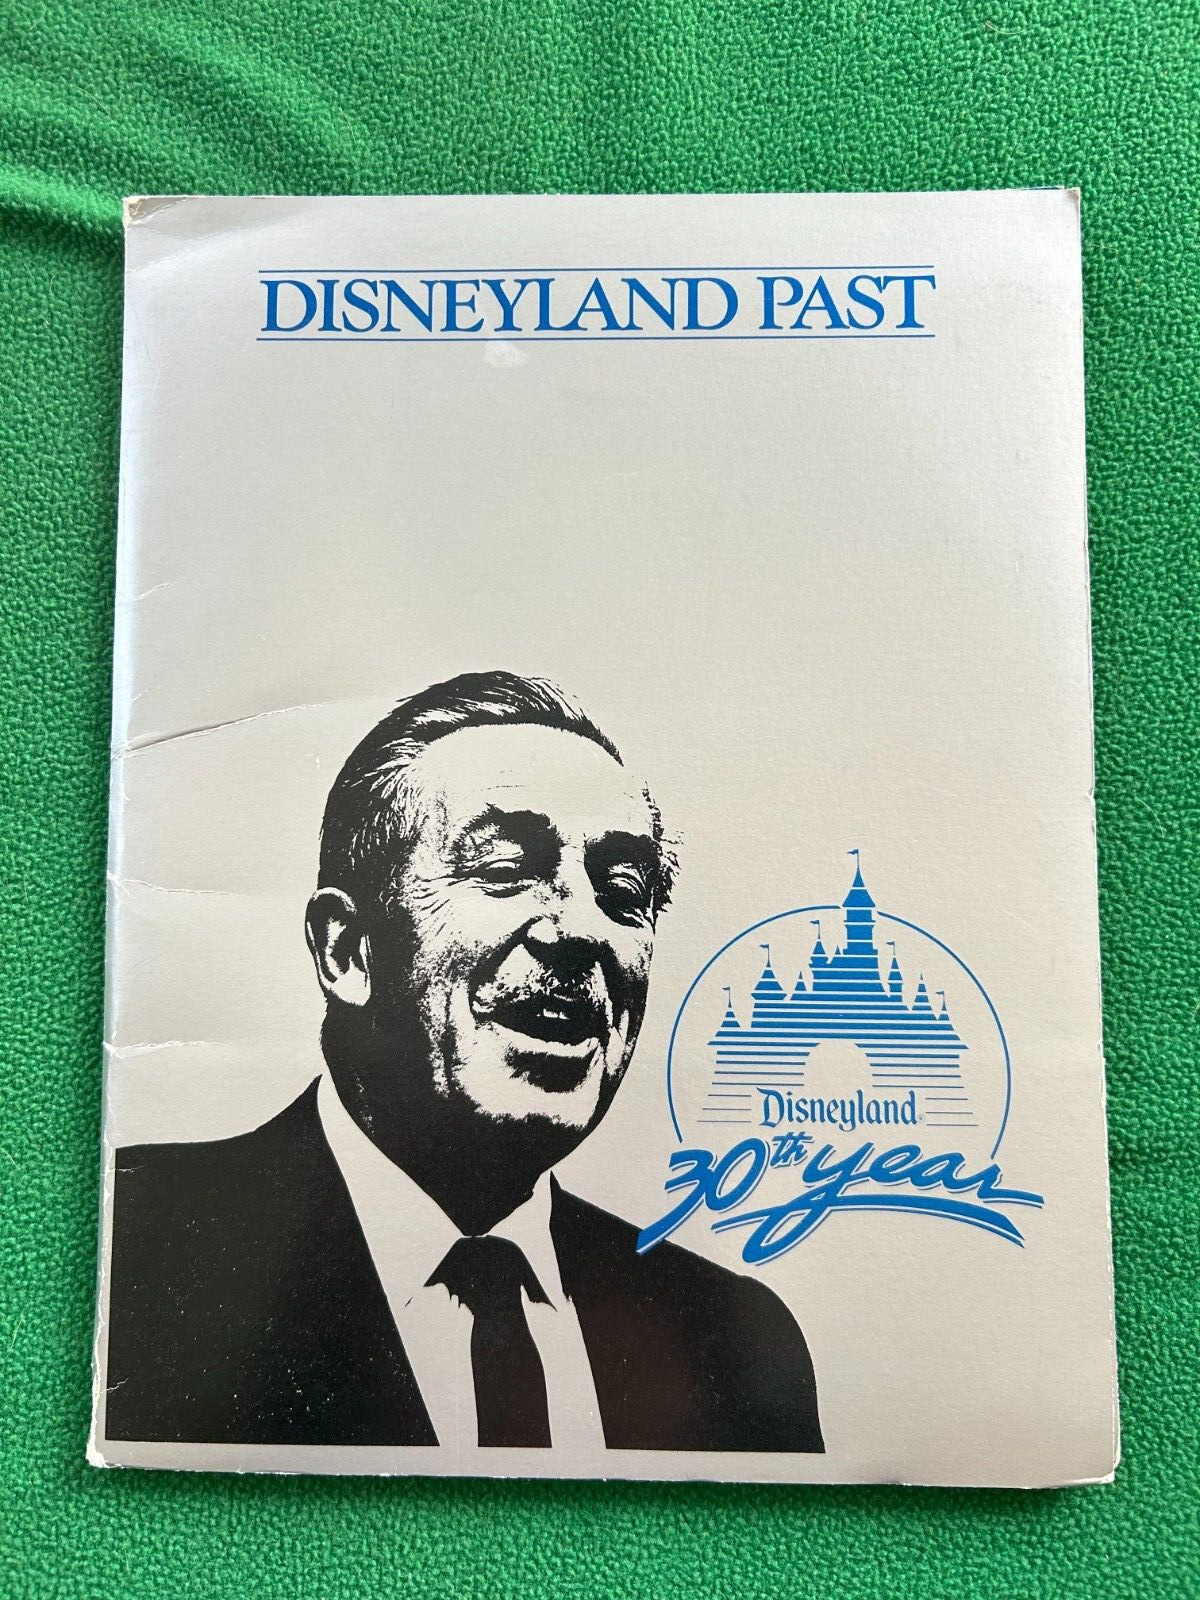 Disneyland Past 30th Anniversary 1955 - 1985 Press Kit Folder with 12 Photos